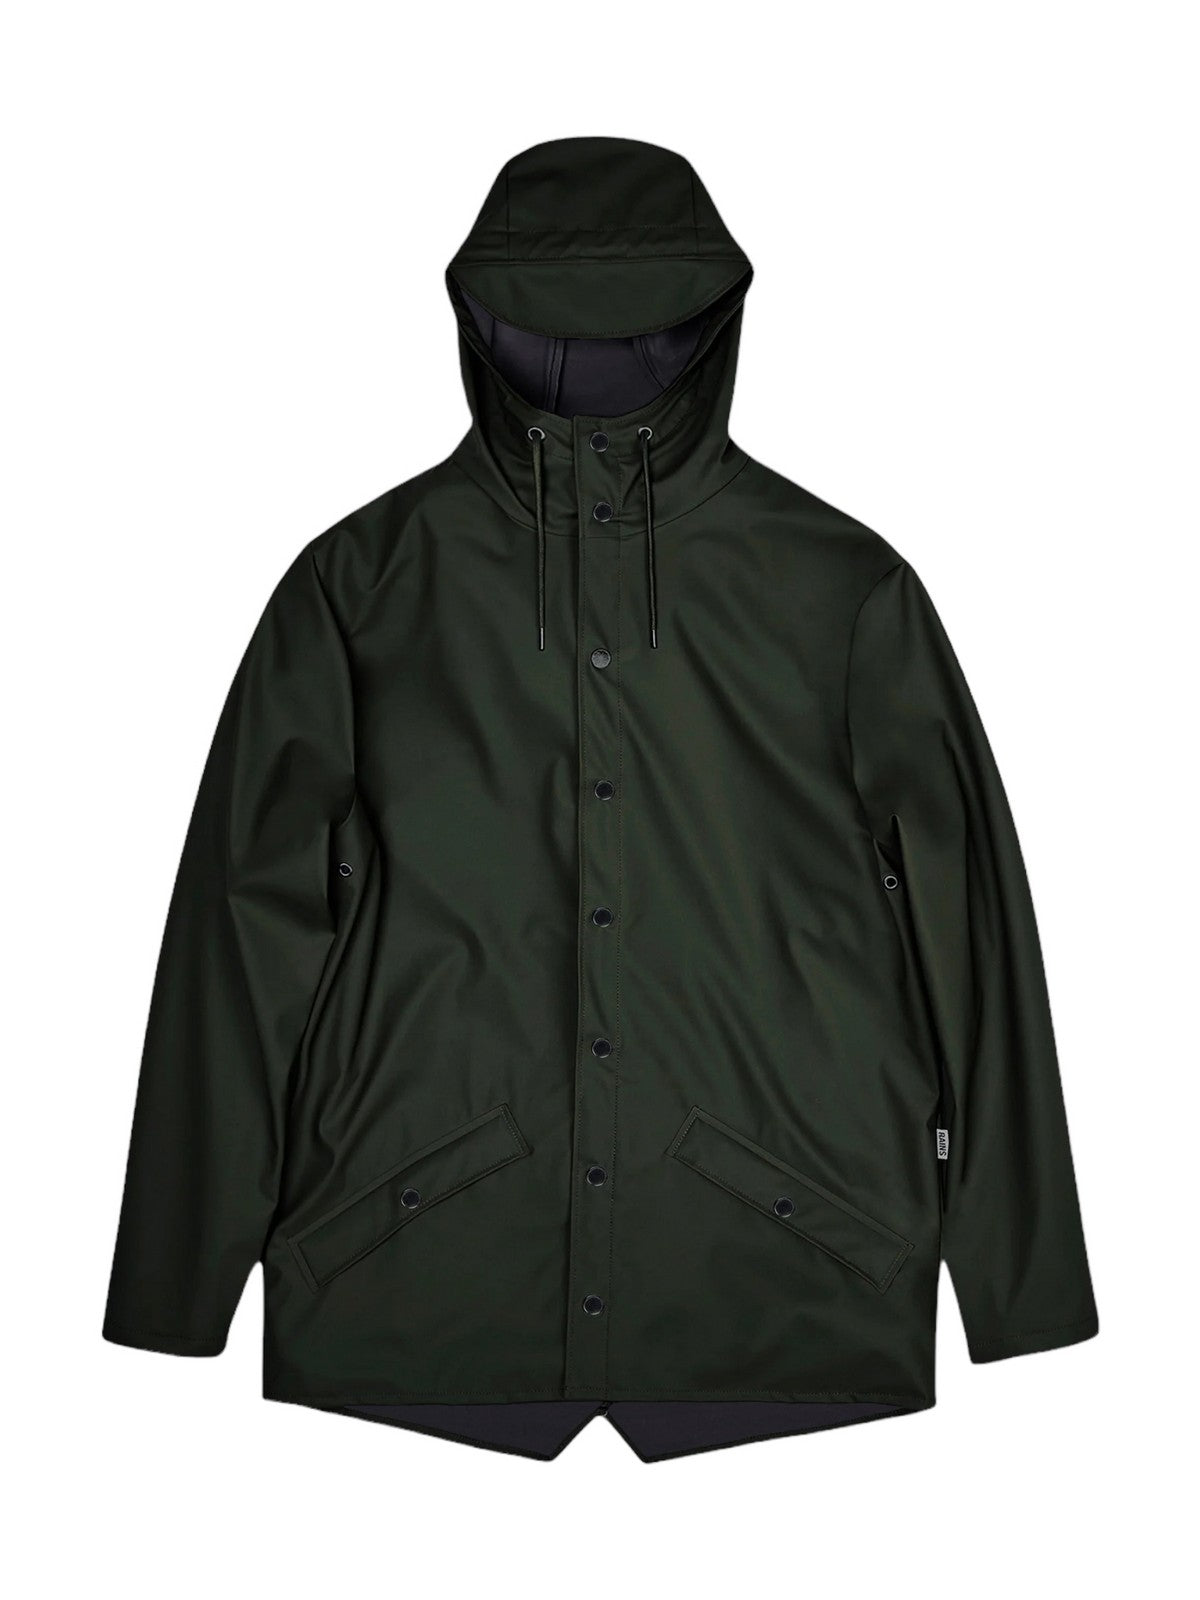 RAINS Giubbino Unisex adulto Jacket W3 12010 03 Green Verde